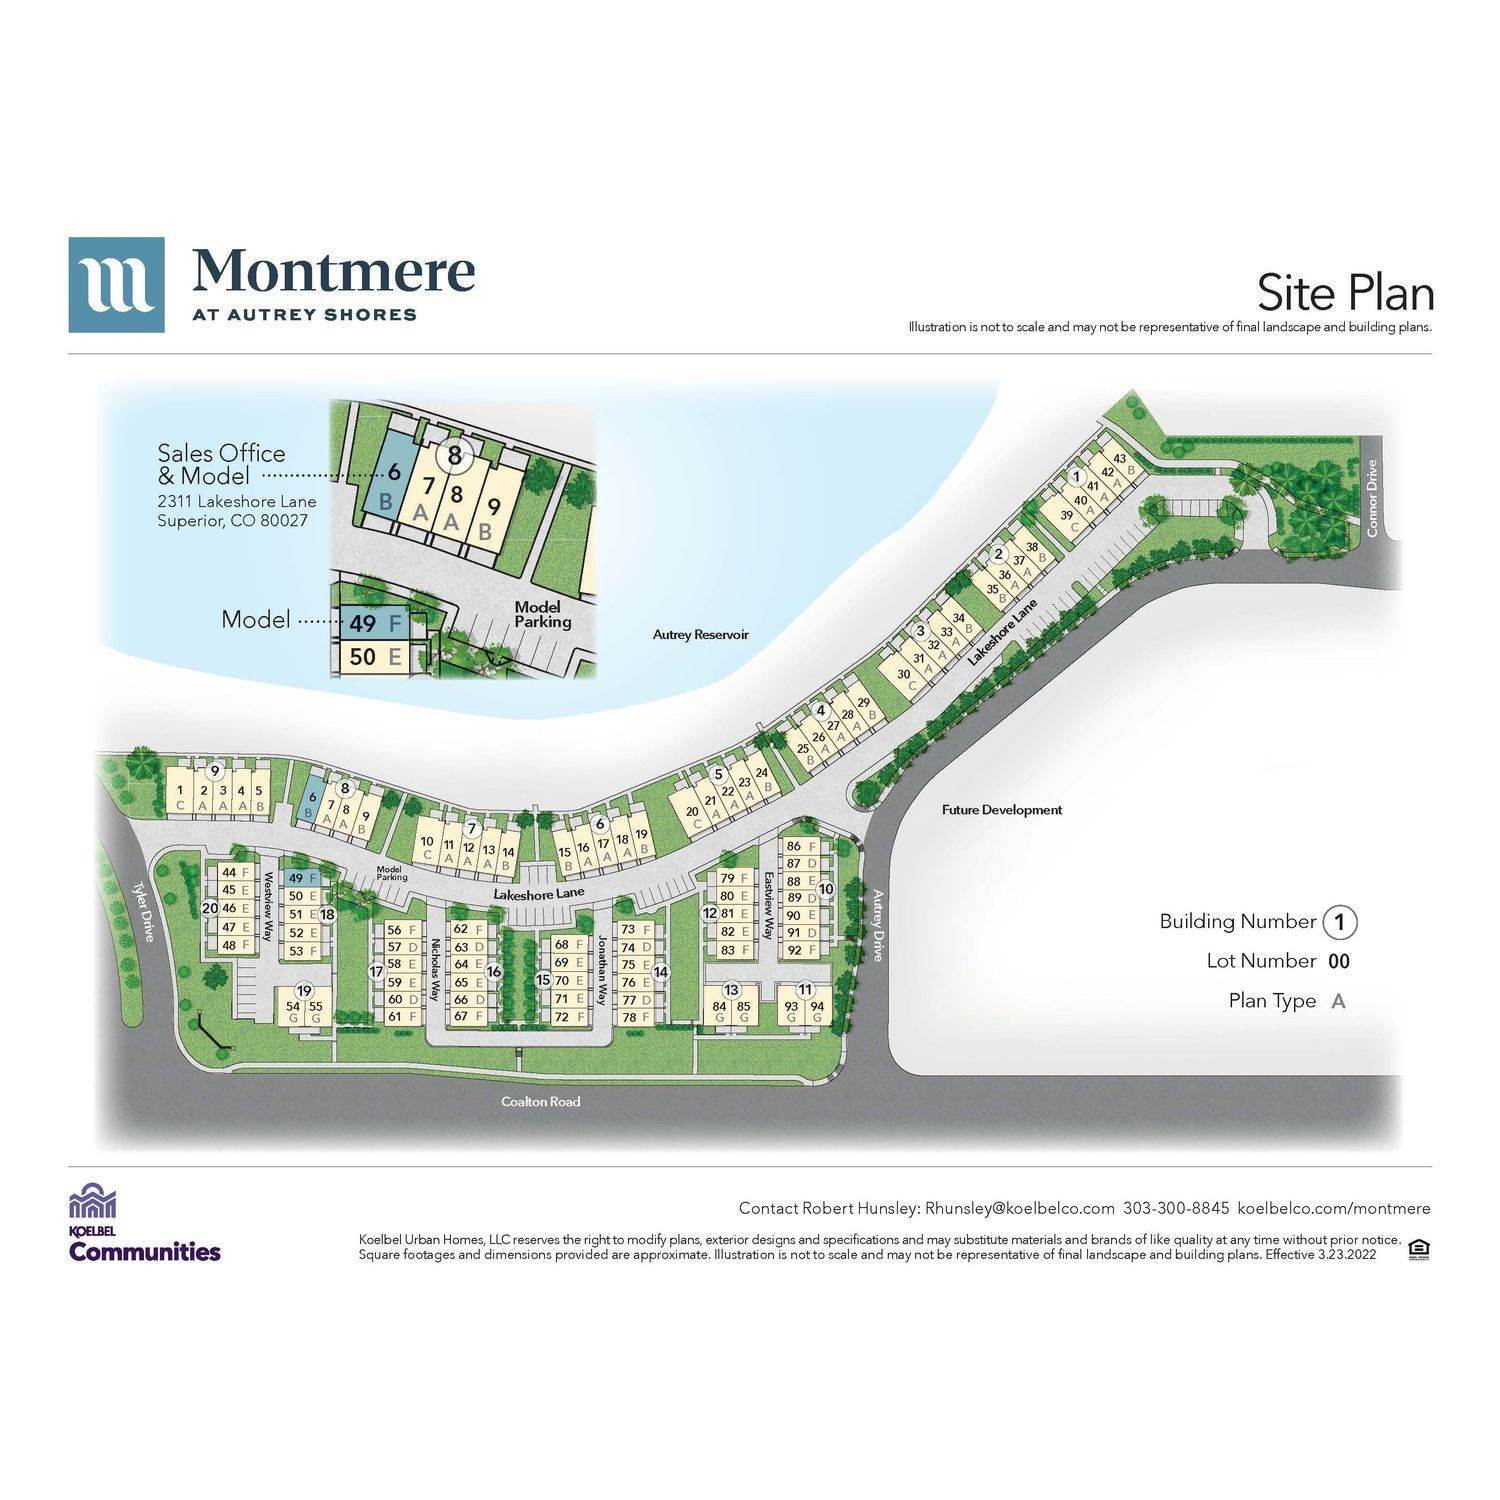 Montmere at Autrey Shores building at 2311 Lakeshore Lane, Superior, CO 80027